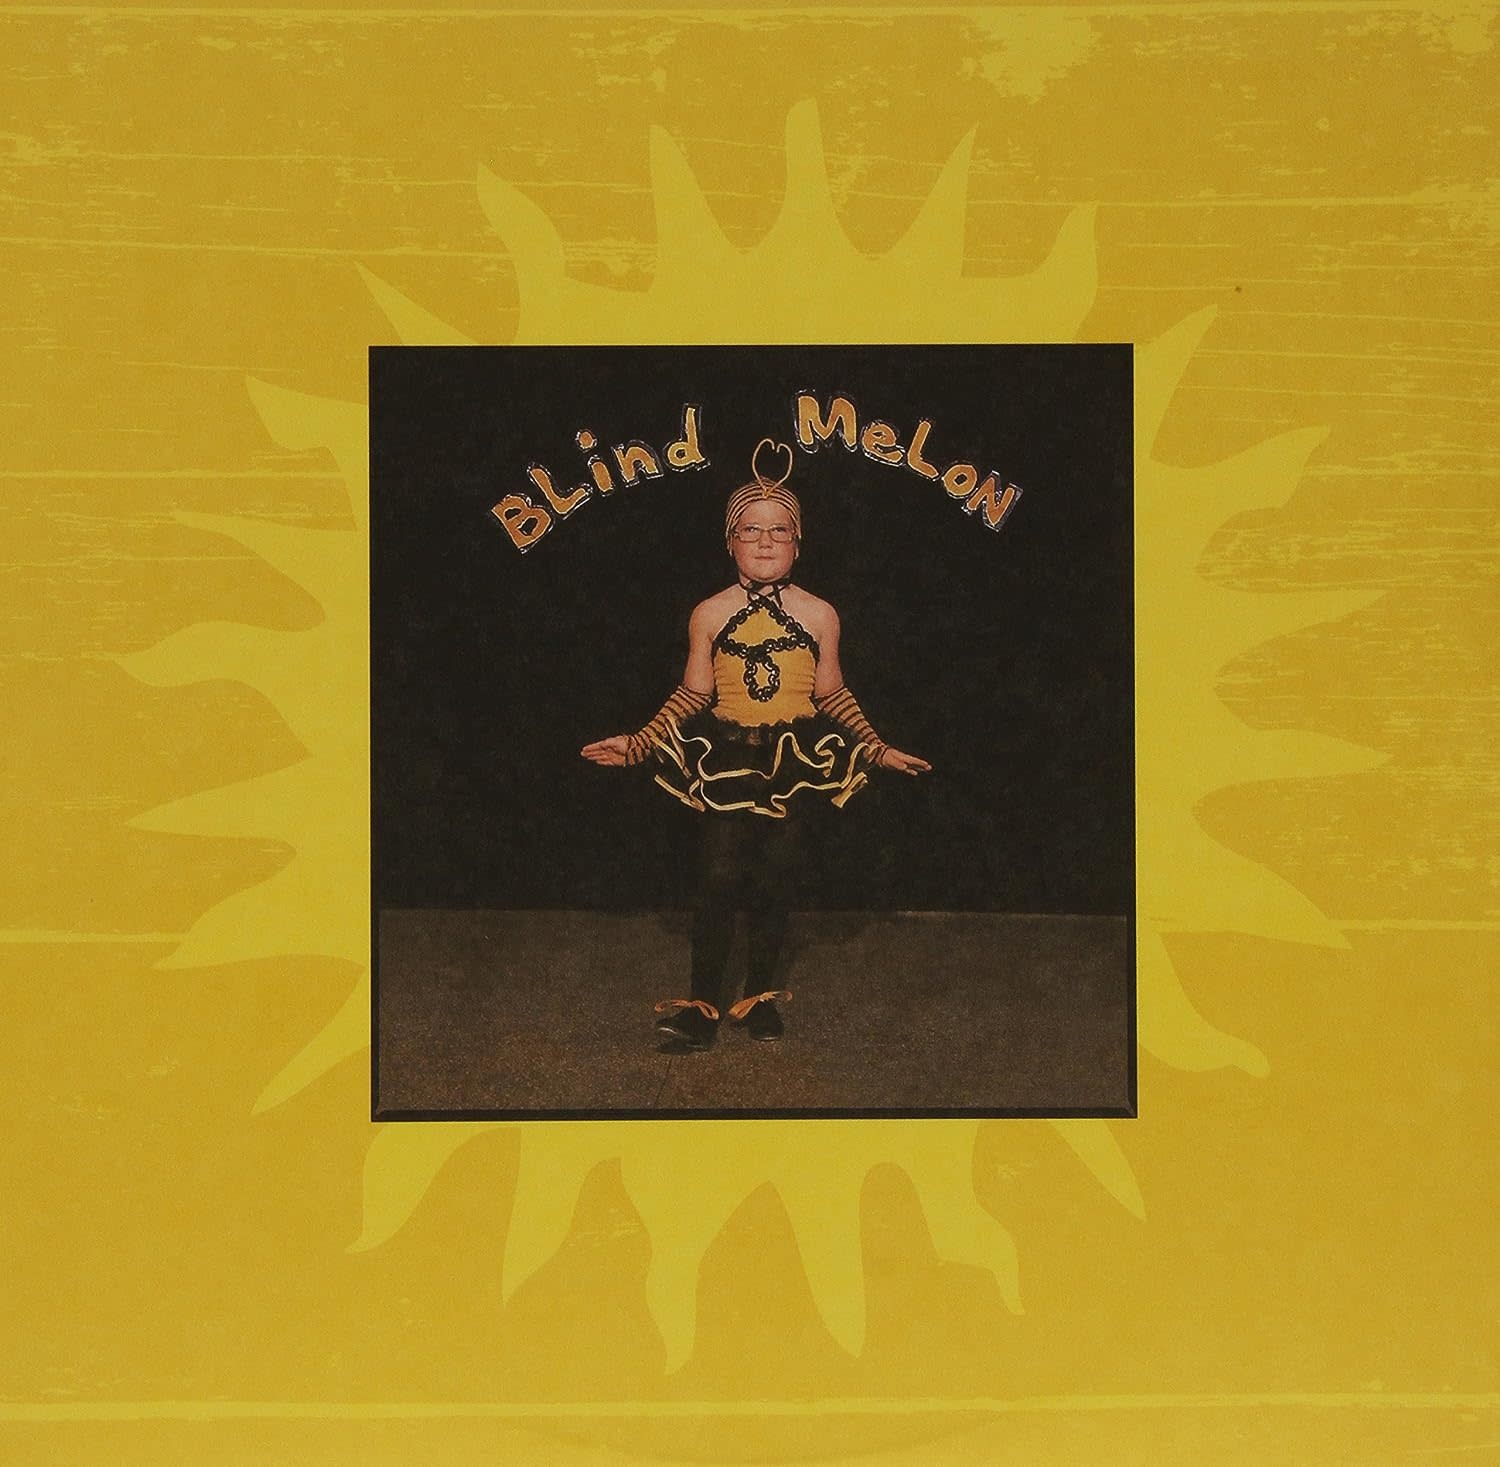 Blind Melon – Blind Melon (20th Anniversary Edition)